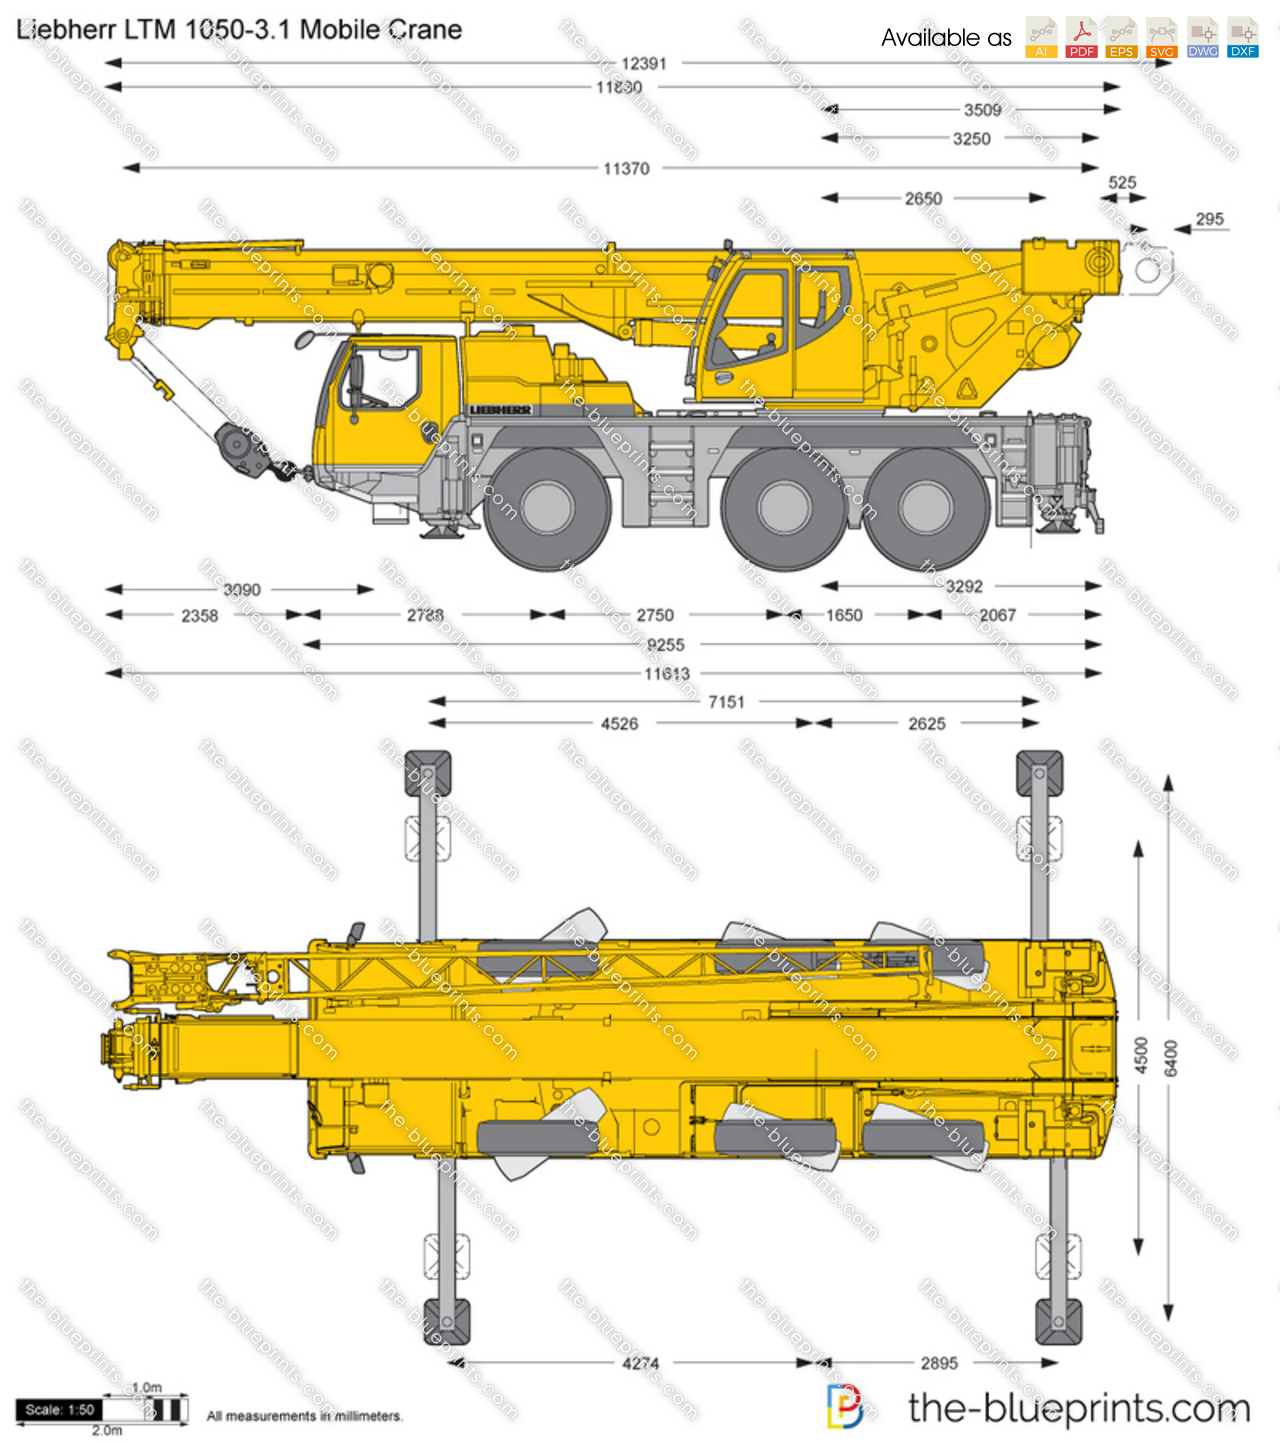 Liebherr LTM 1050-3.1 Mobile Crane